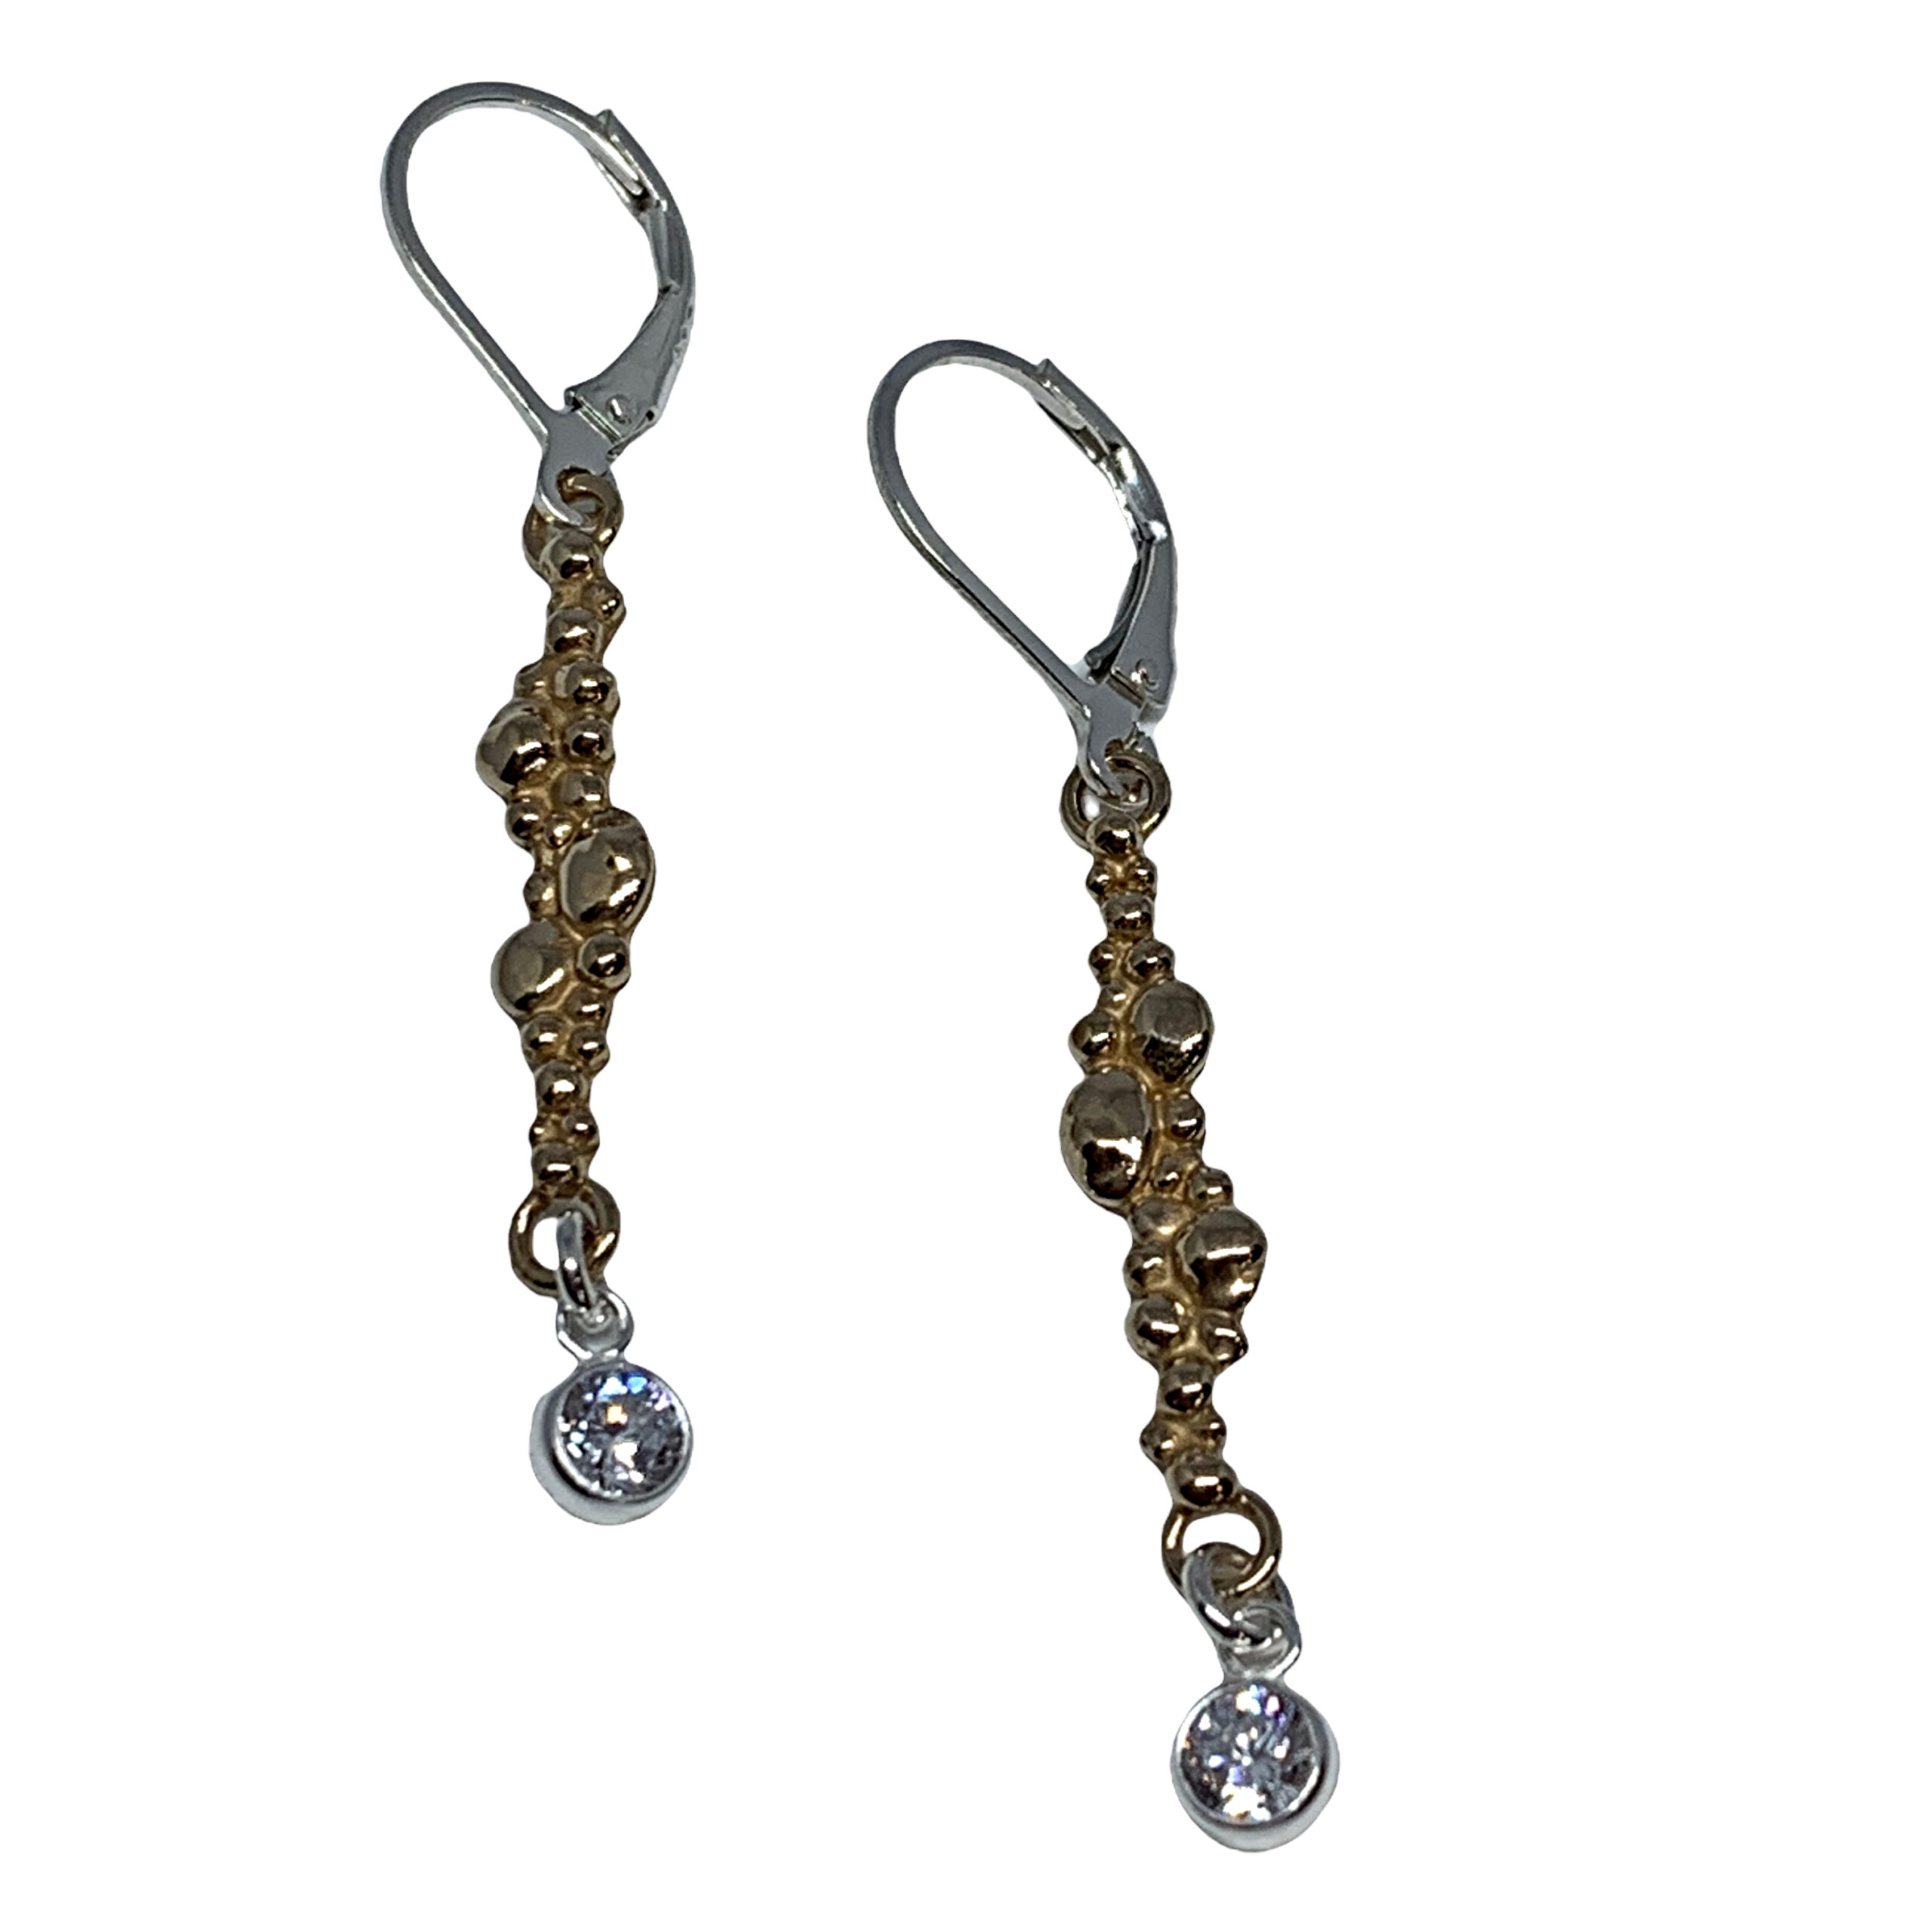 Handmade bronze, sterling silver, + CZ earrings by Karyn Chopik | Effusion Art Gallery + Cast Glass Studio, Invermere BC